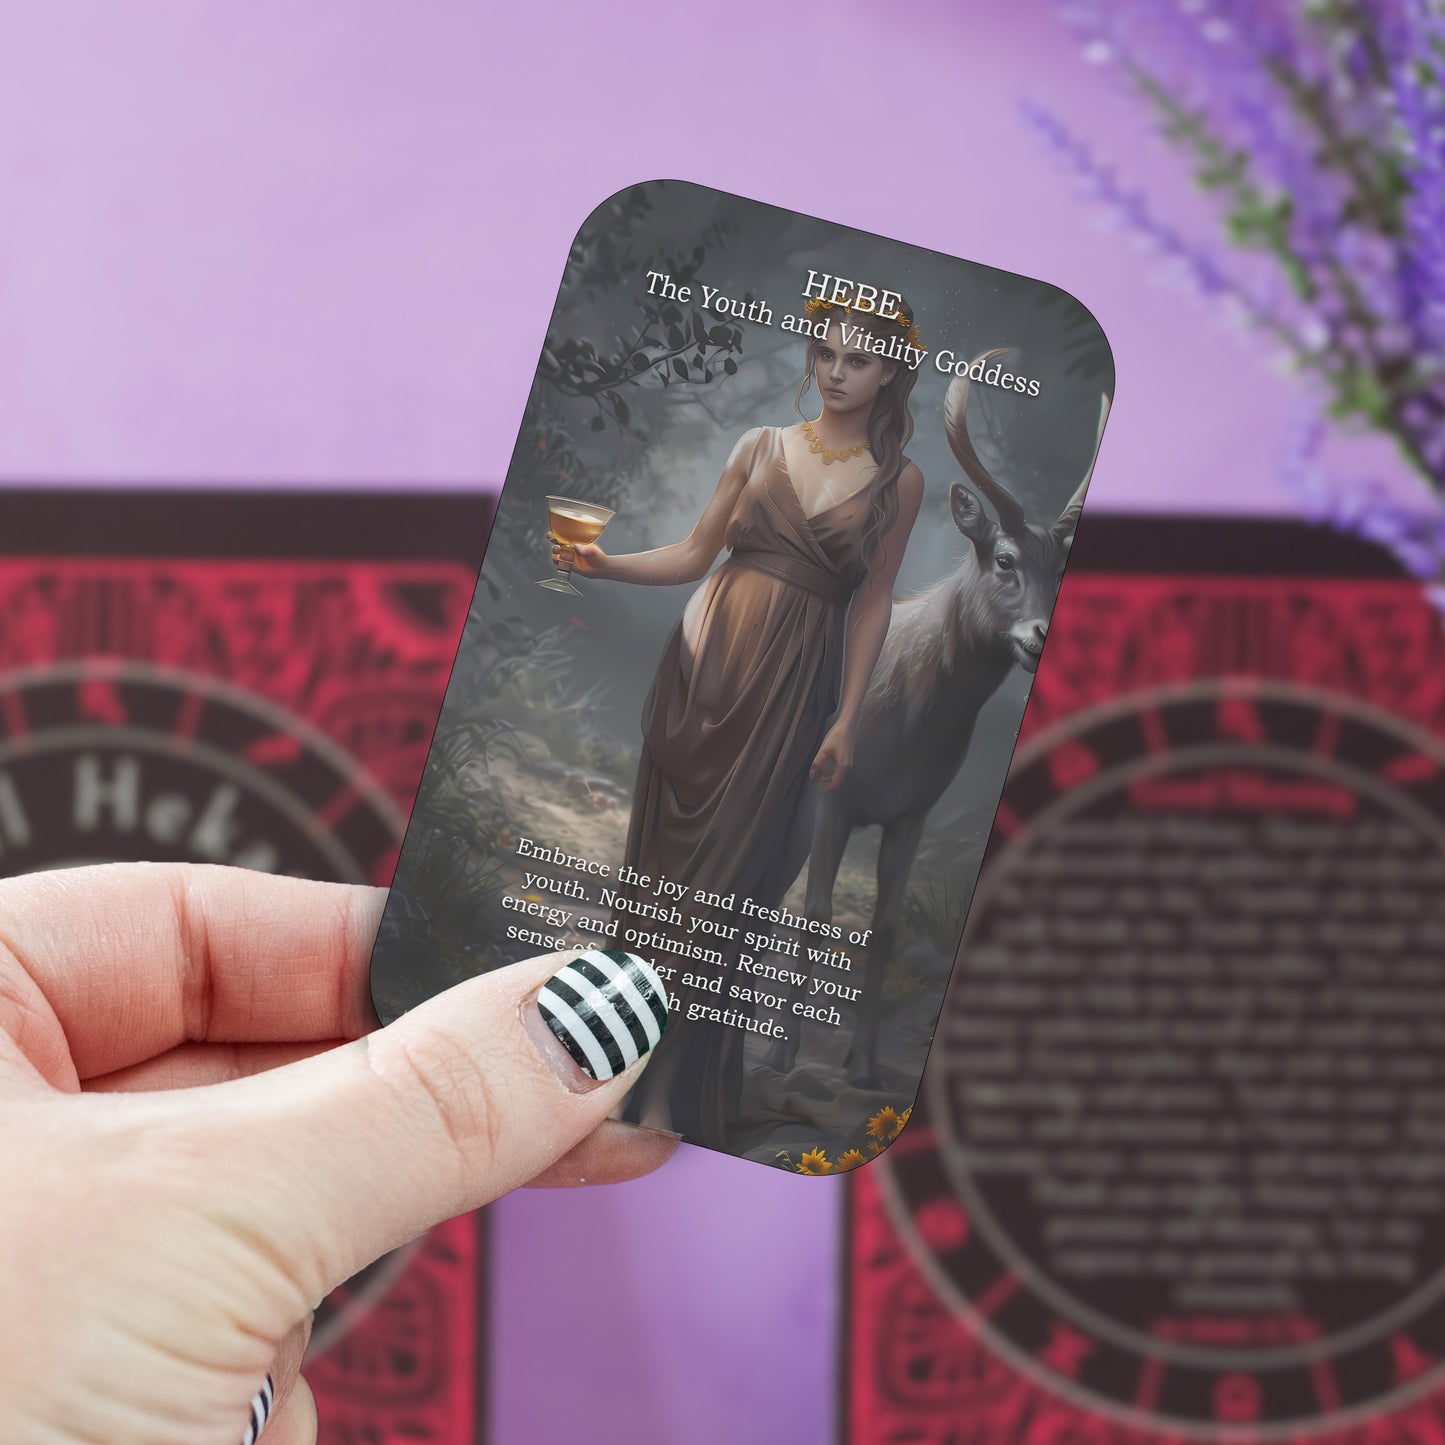 NEW Greek Goddess oracle cards - oracle deck, 16 card deck, affirmation cards, tarot deck, oracle cards, feminine cards, greek pantheon